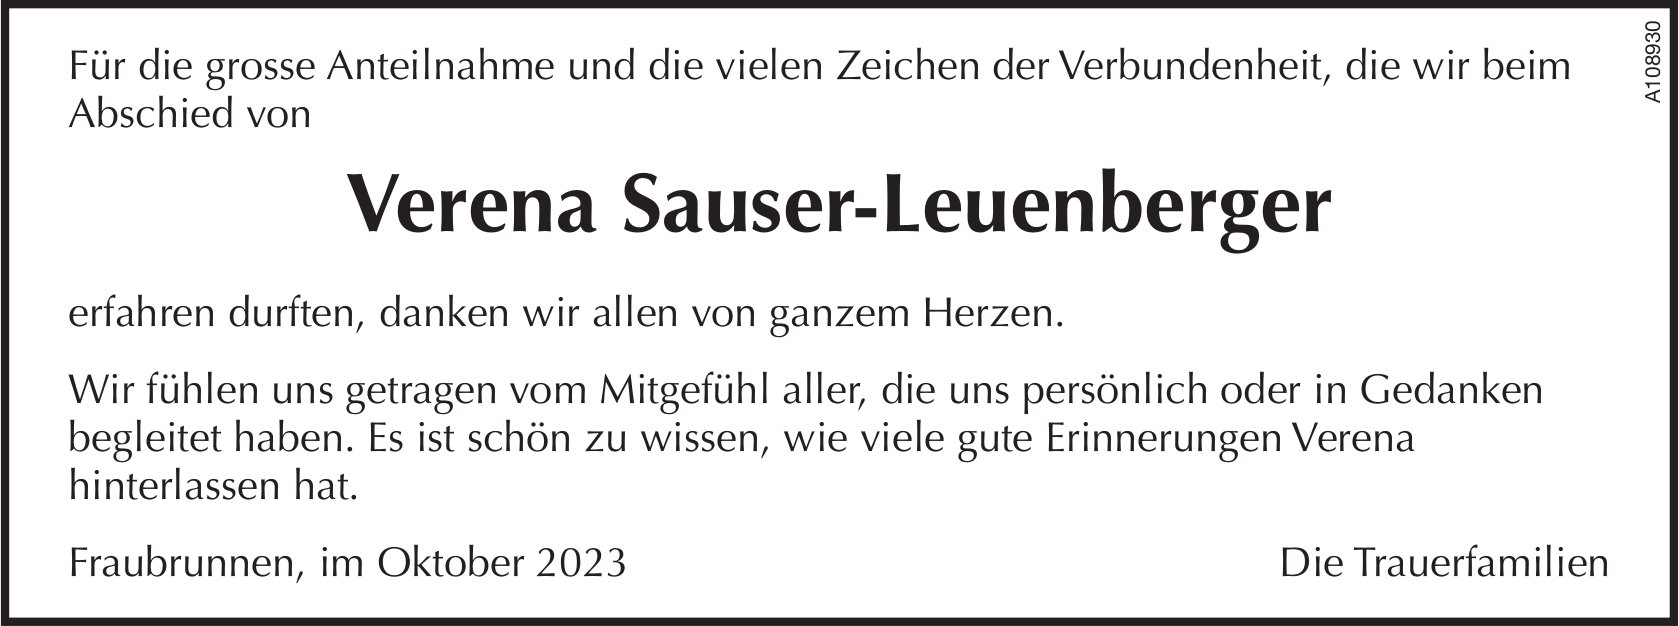 Verena Sauser-Leuenberger, im Oktober 2023 / DS